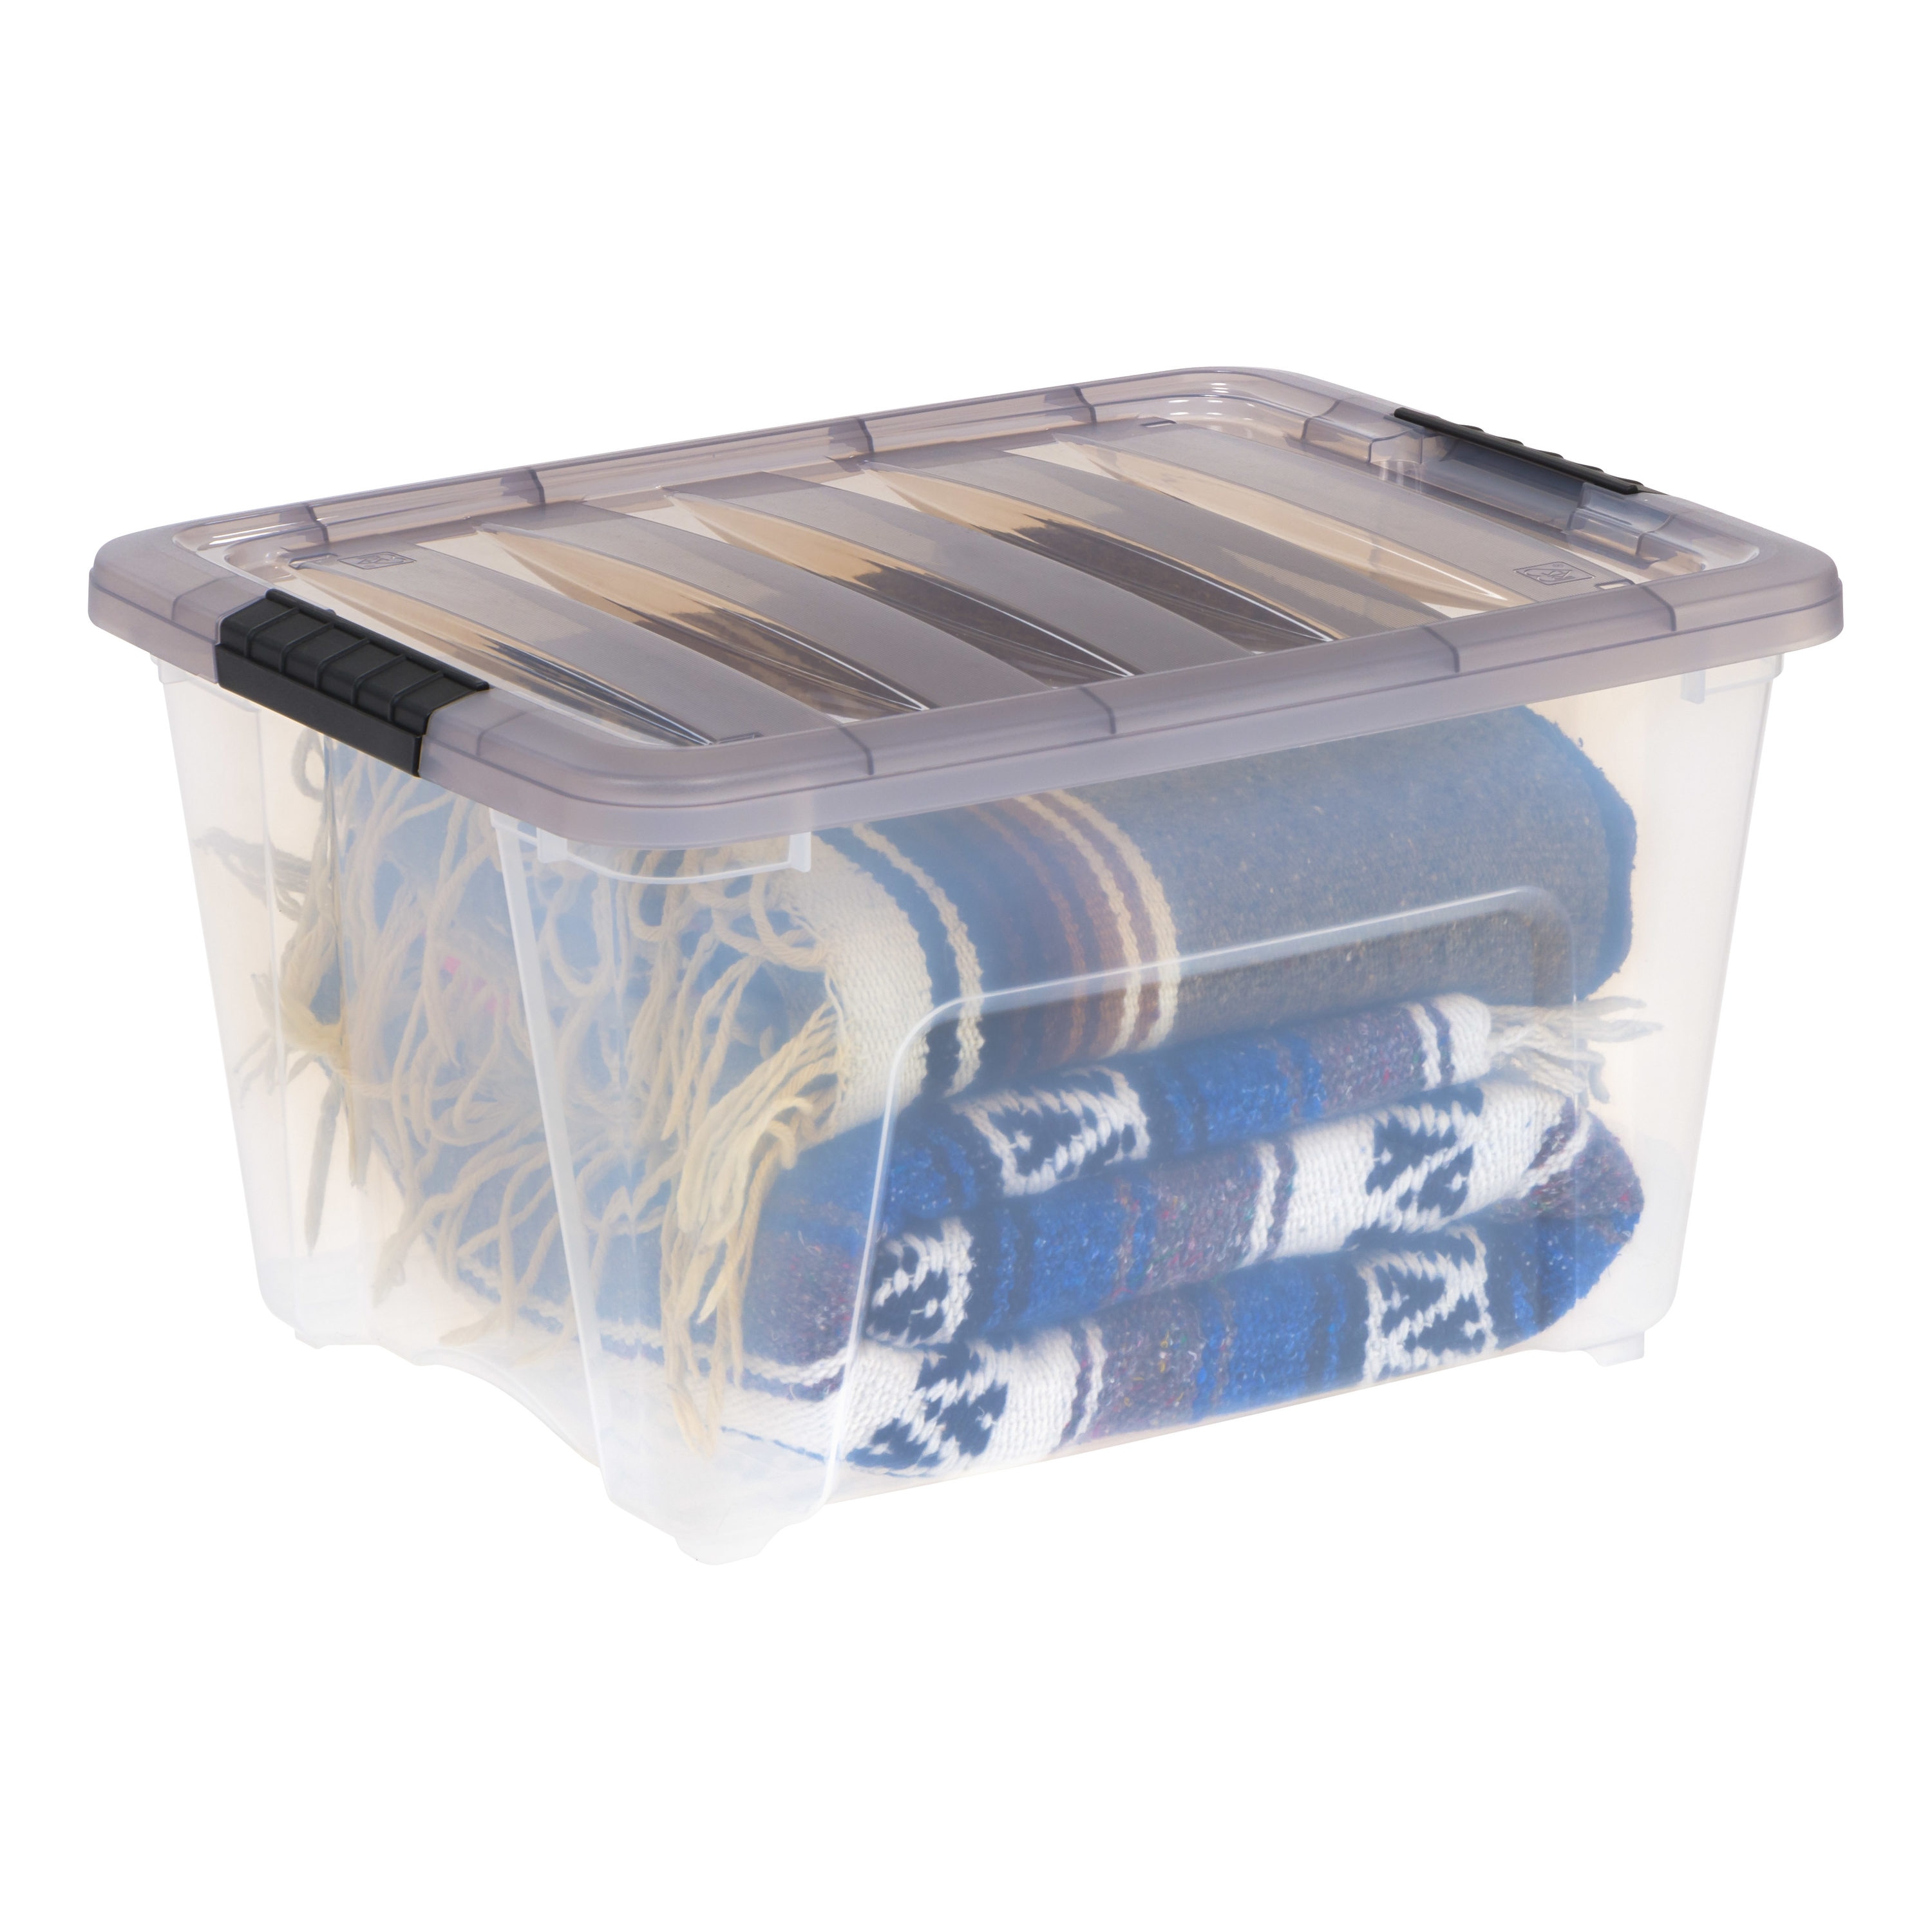 Iris 64 Quart Modular Storage Box, 8 Pack, Blue